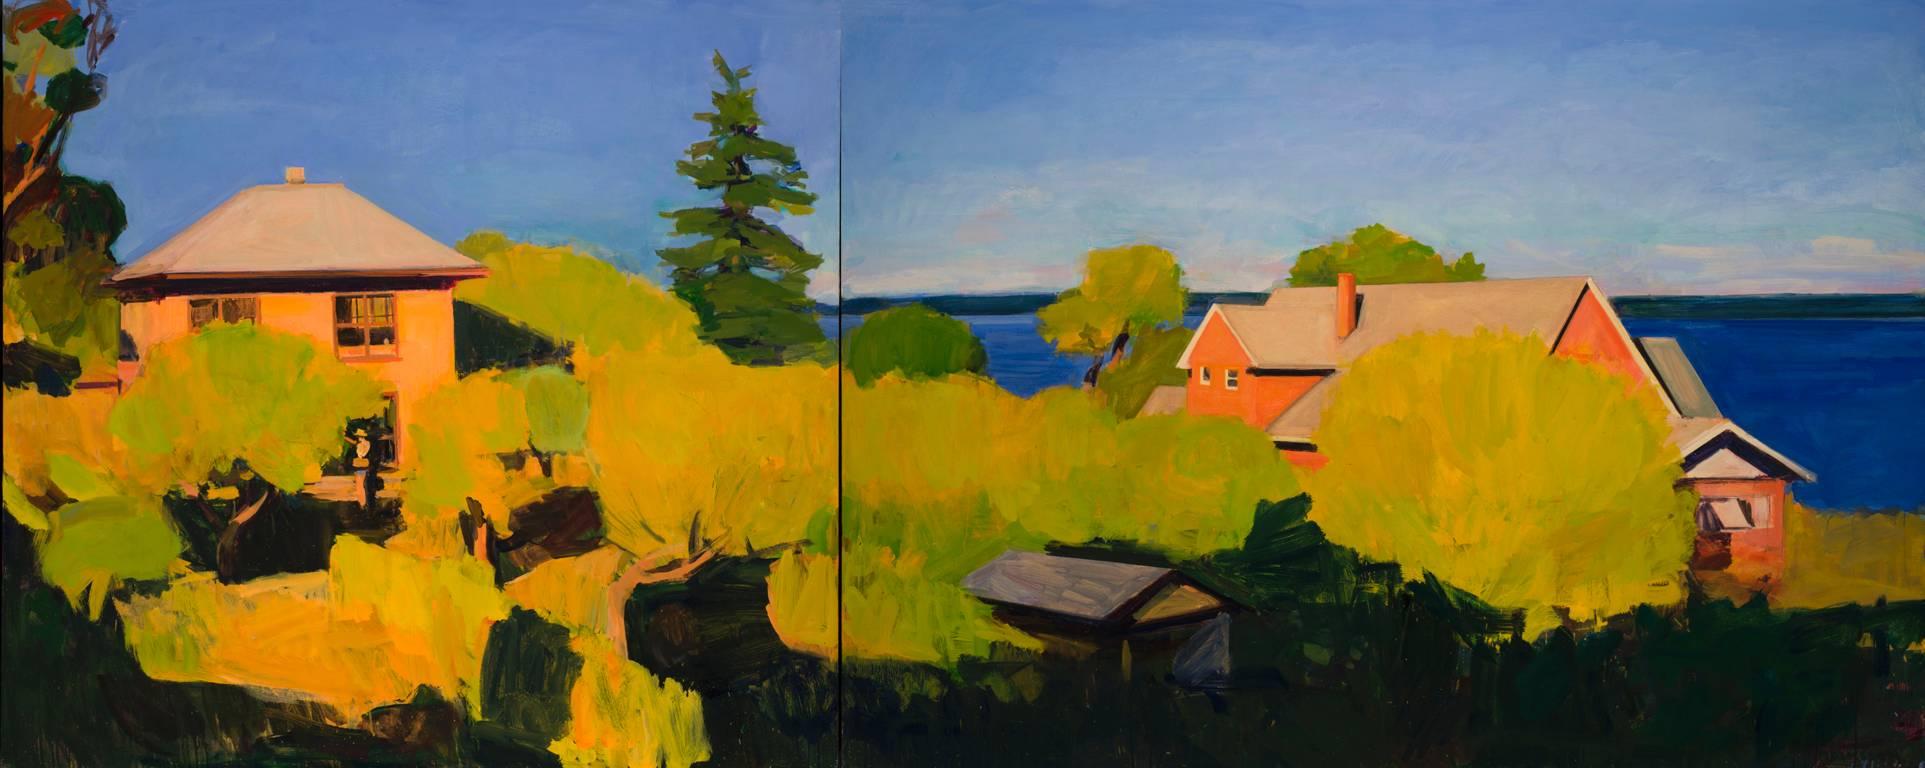 Kurt Solmssen Landscape Painting - Summer on 7th St. (Diptych) 